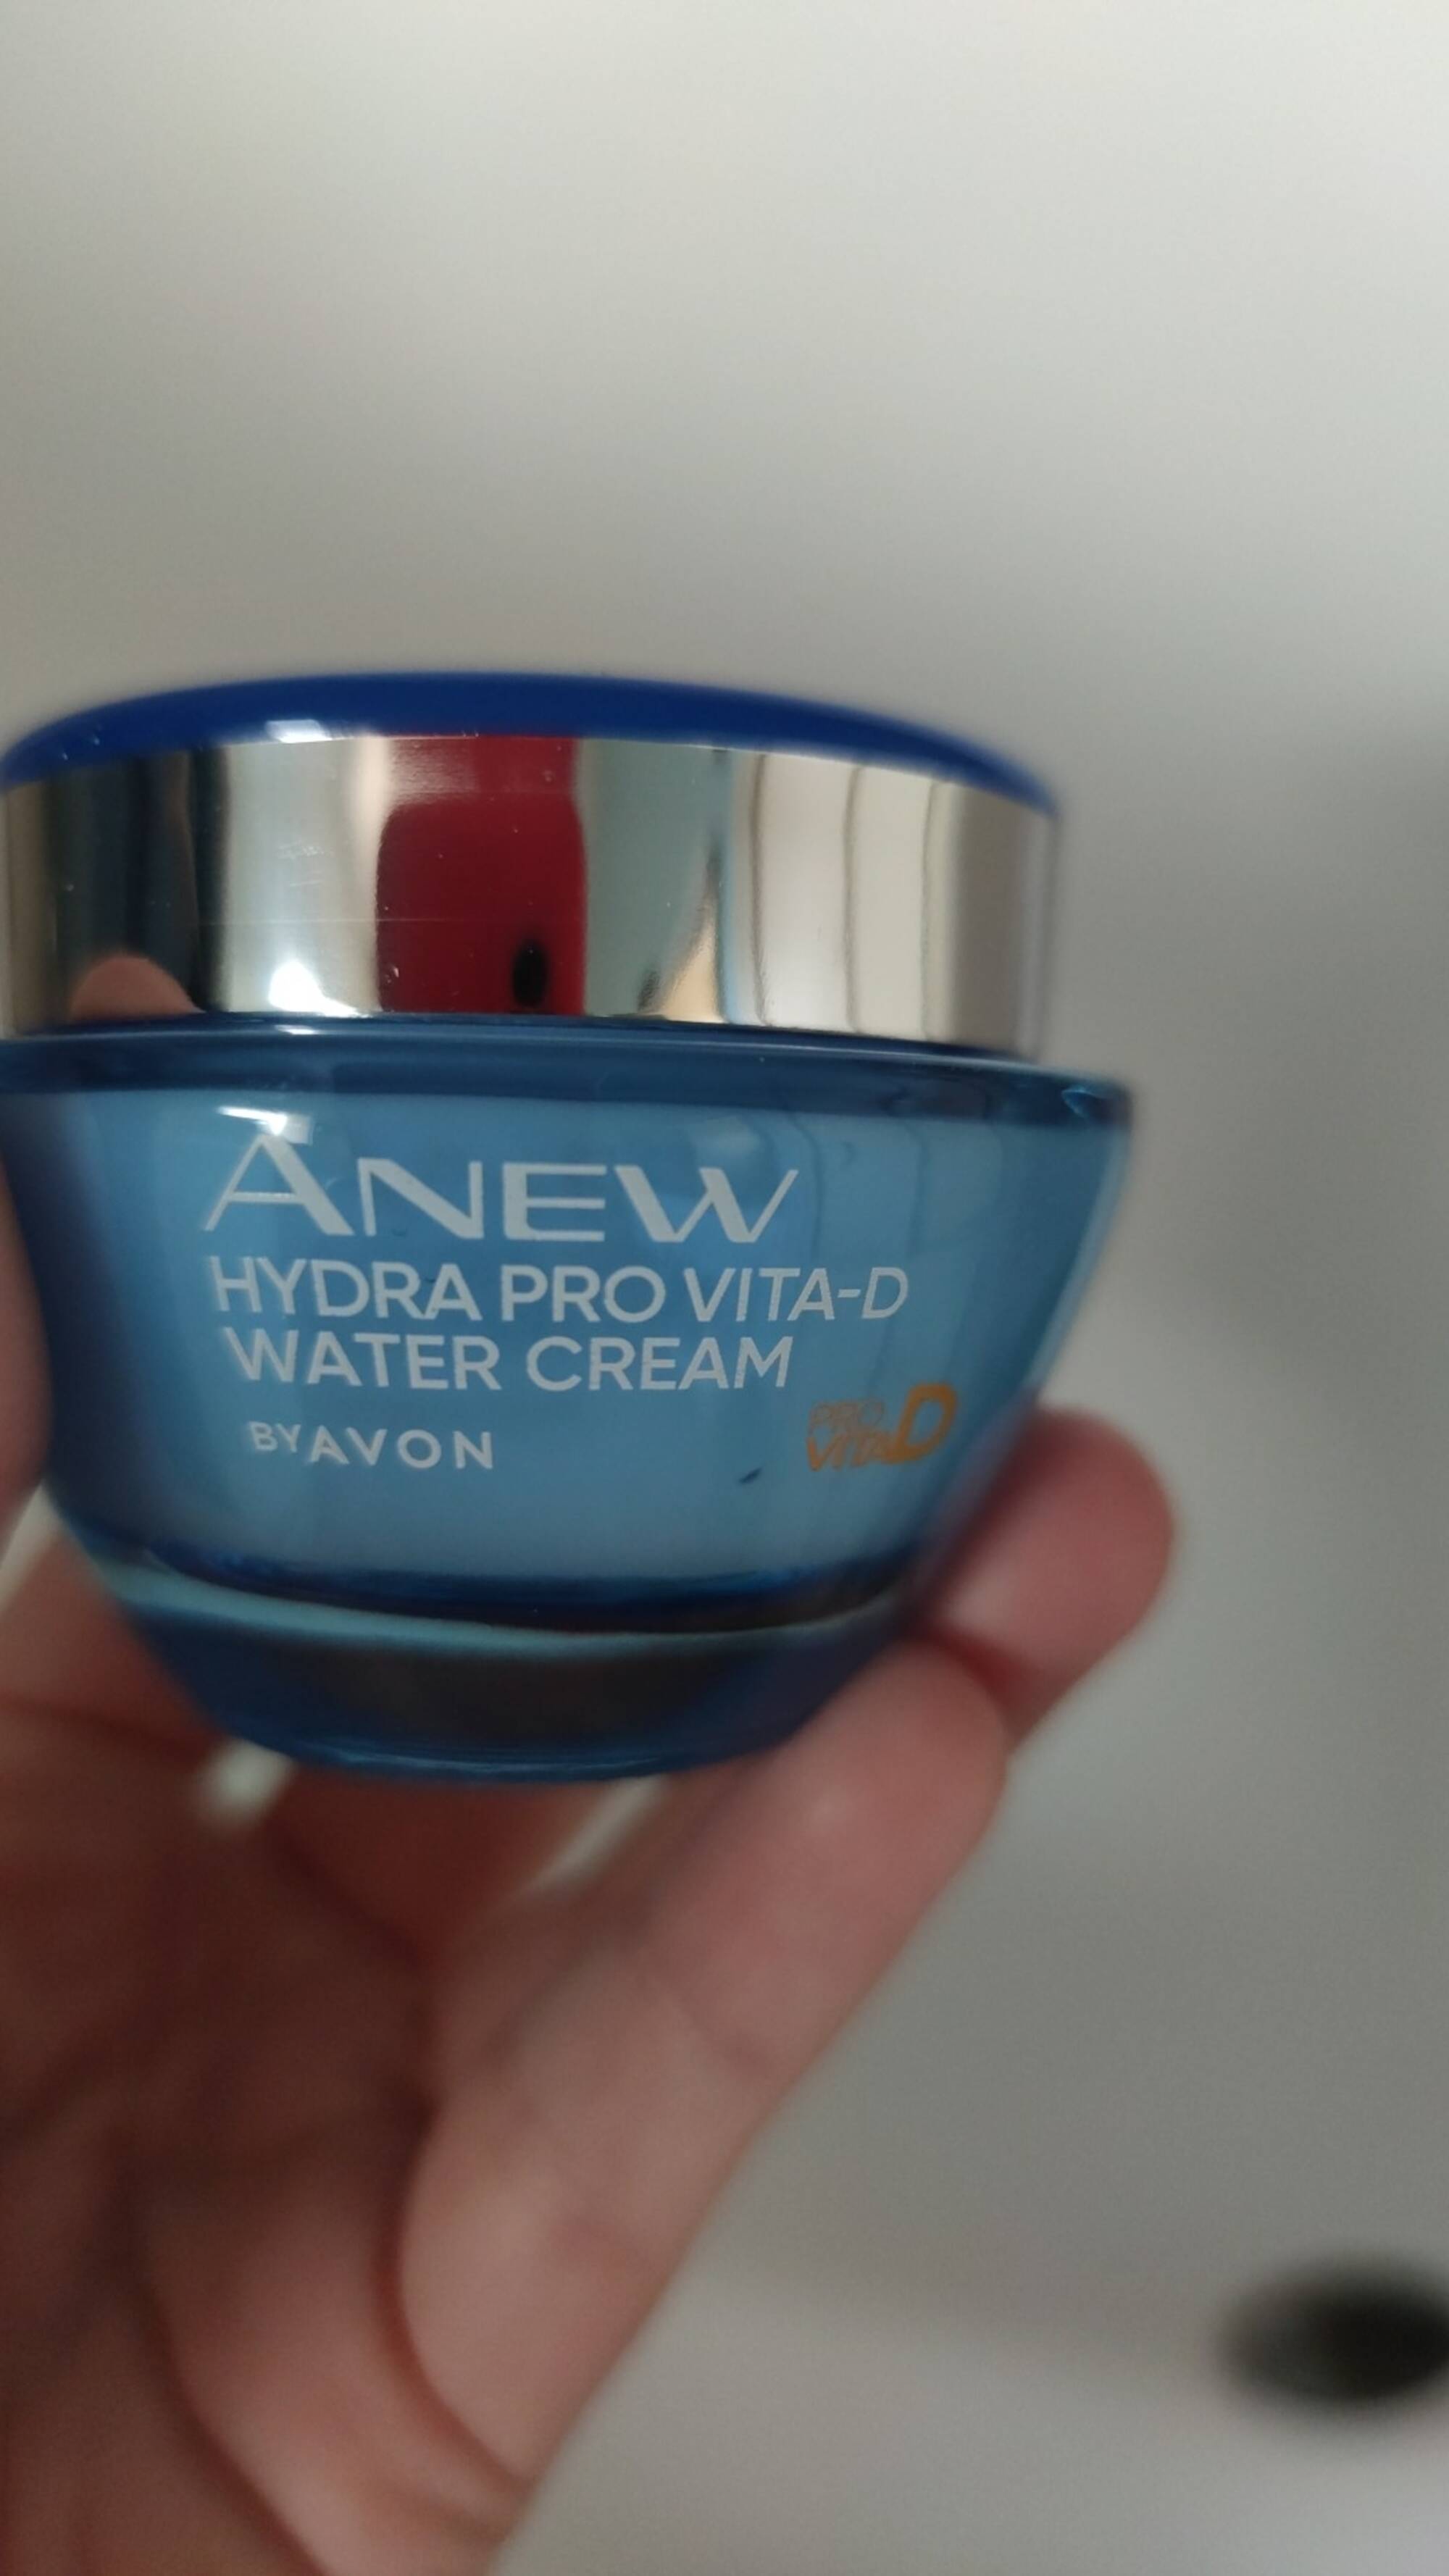 AVON - Anew - Hydra pro vita-D water cream